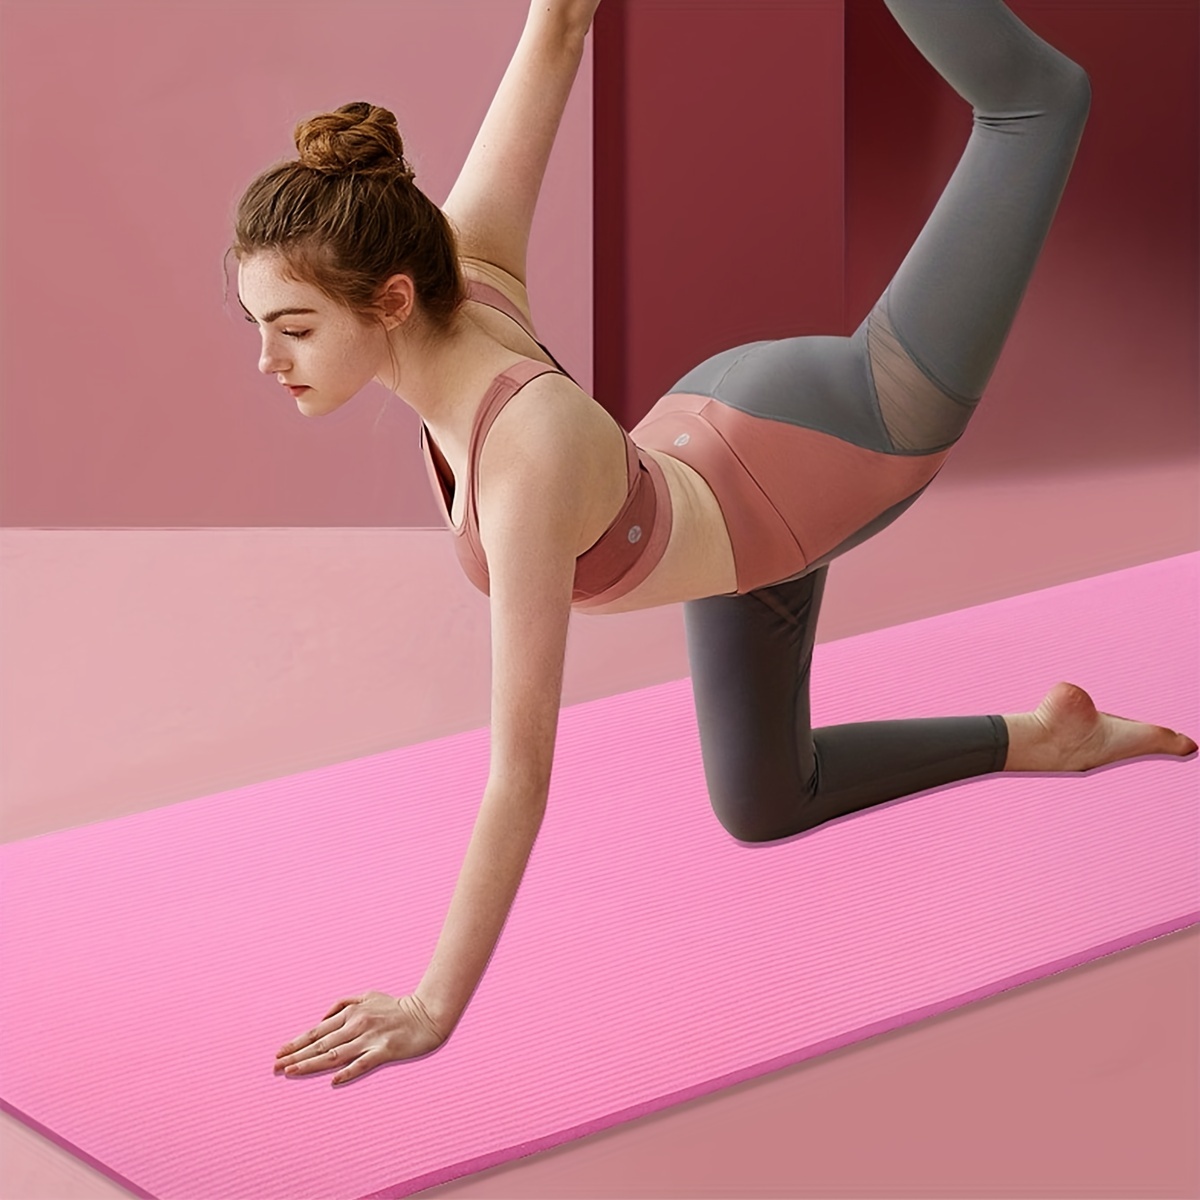 1pc Mute Shockproof Yoga Mat, Home Non-slip Fitness Mat For Pilates,  Skipping, Exercise, 180*61cm/70.87*24.02in